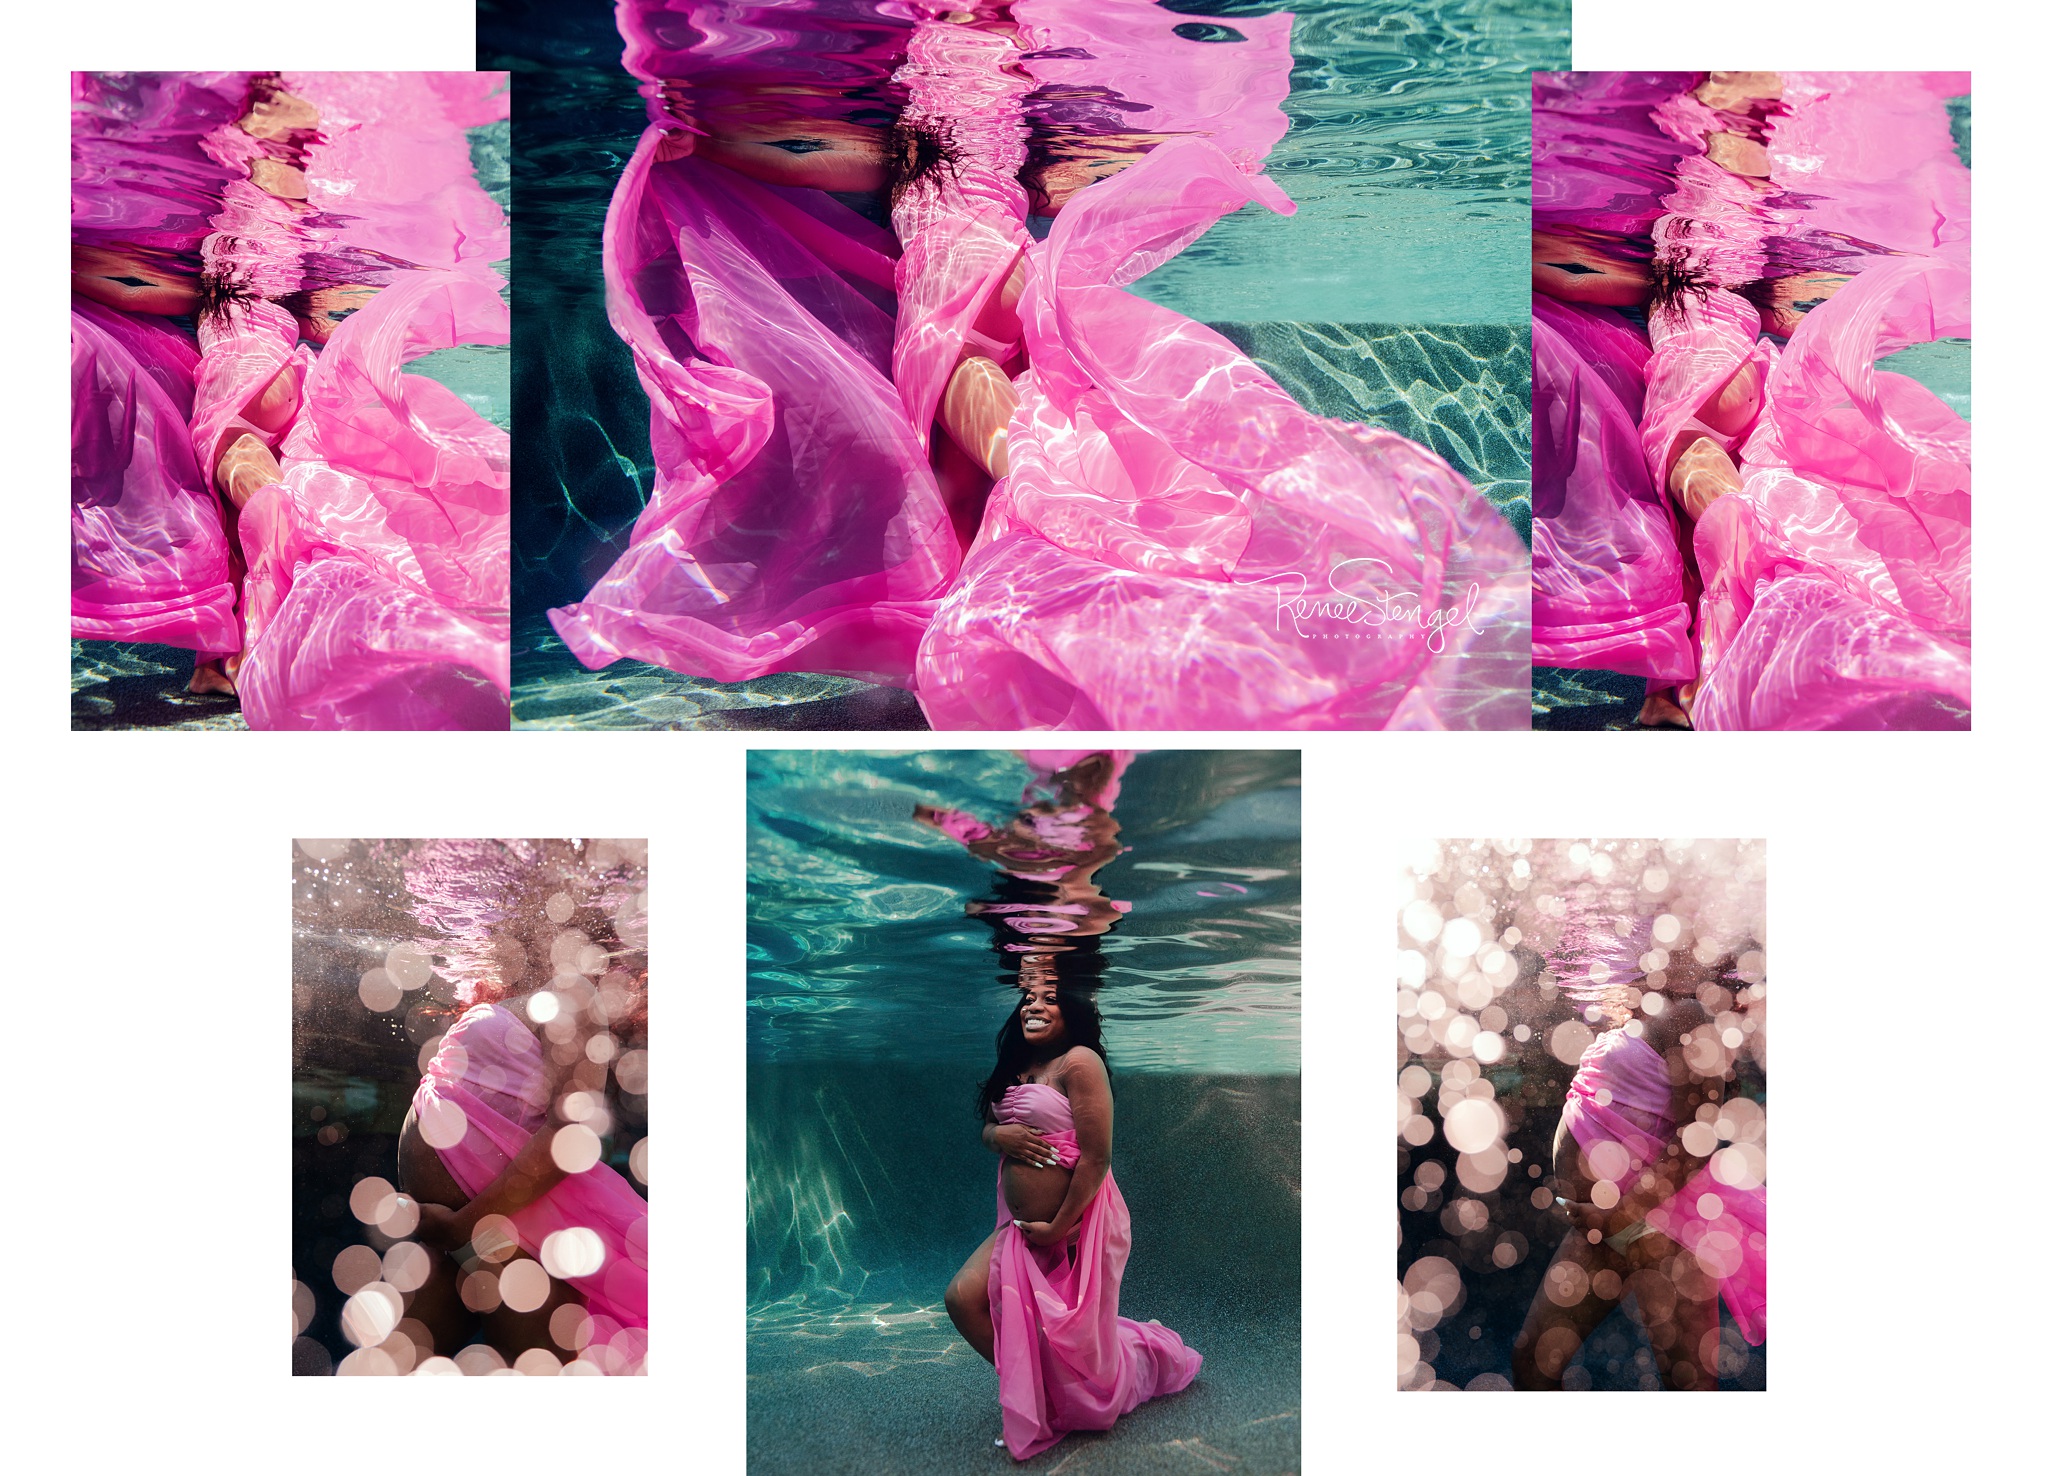 Pink Underwater Maternity Custom Underwater Art Album Design Spread by Charlotte Underwater Photographer Renee Stengel Photography